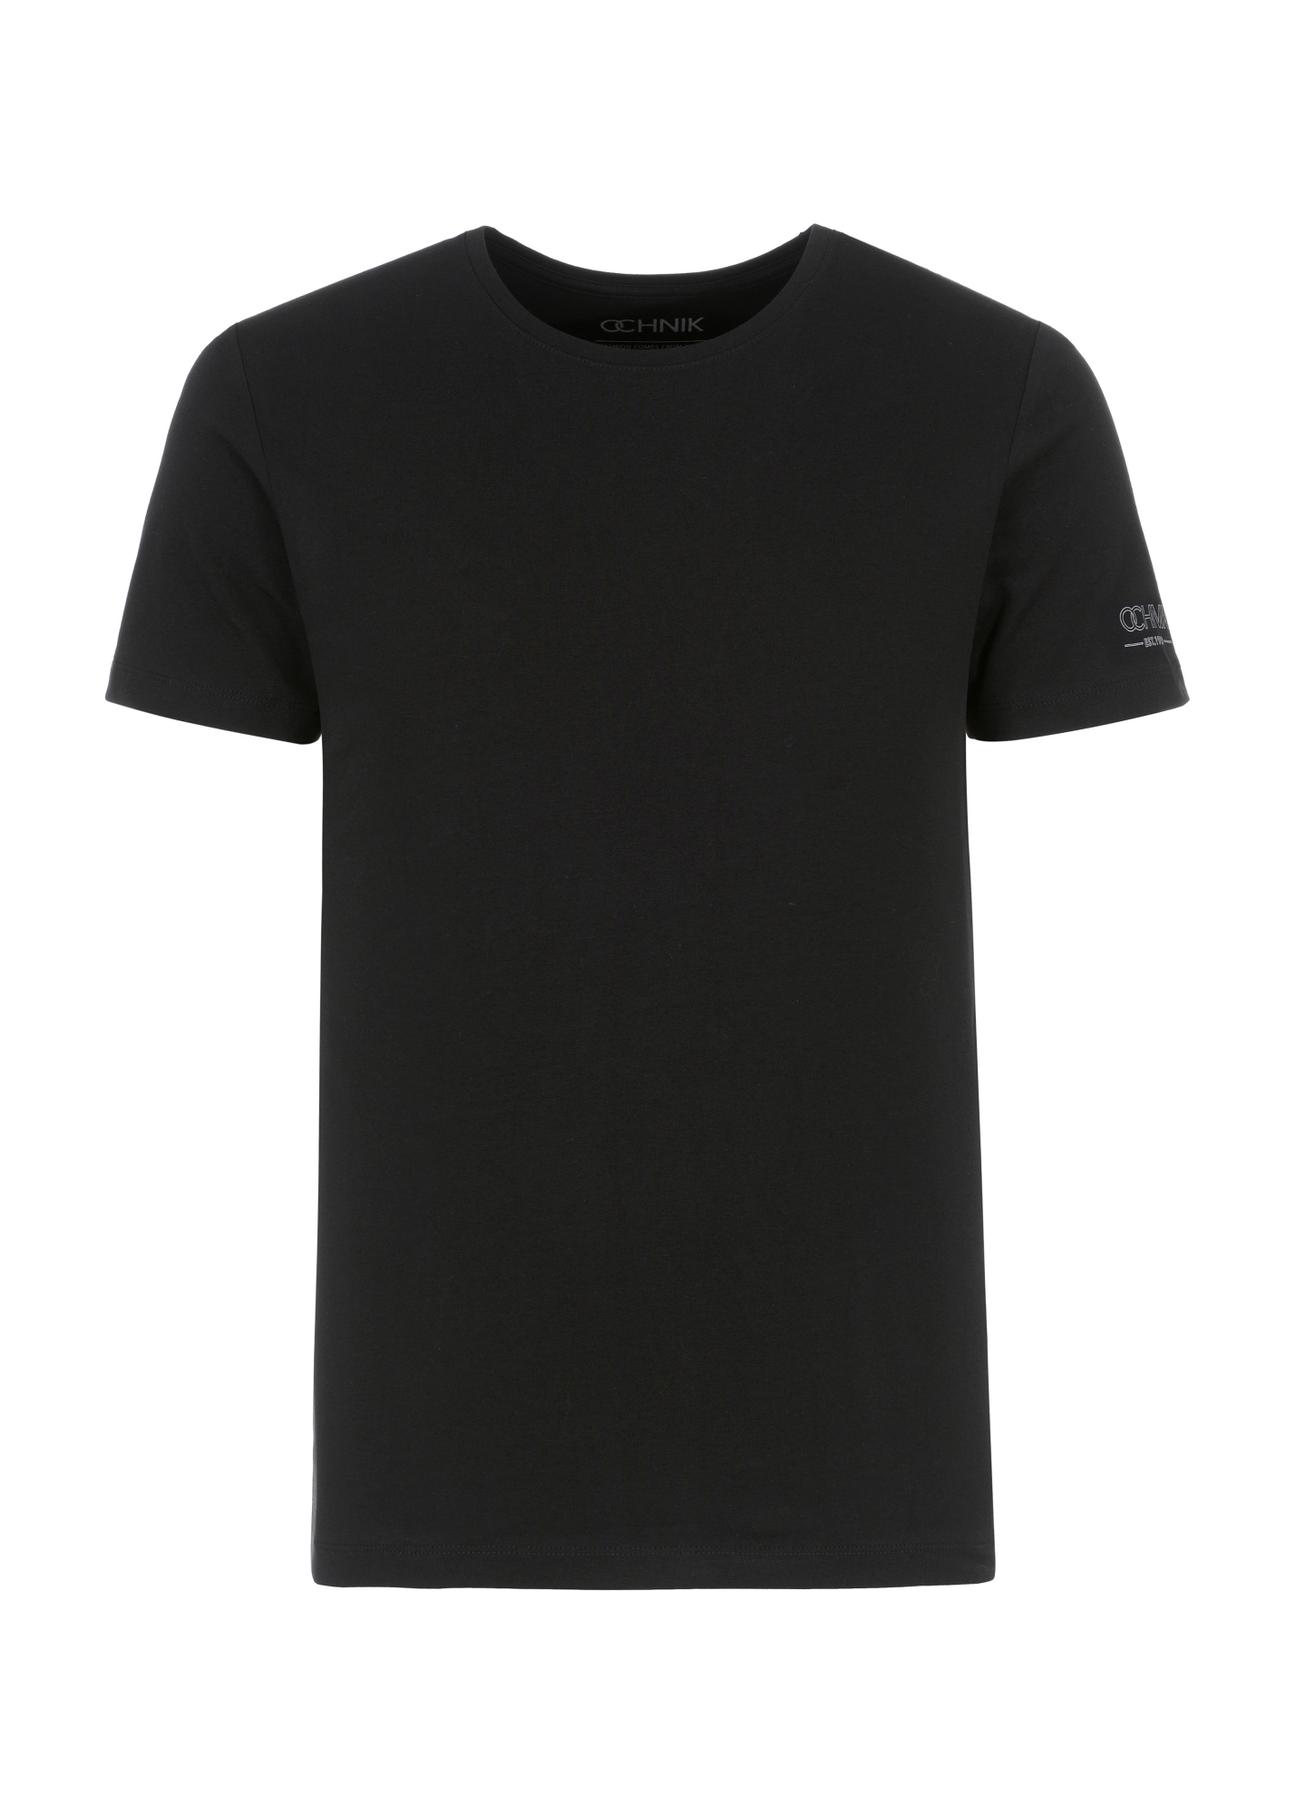 Czarny basic T-shirt męski  z logo TSHMT-0091-99(KS)